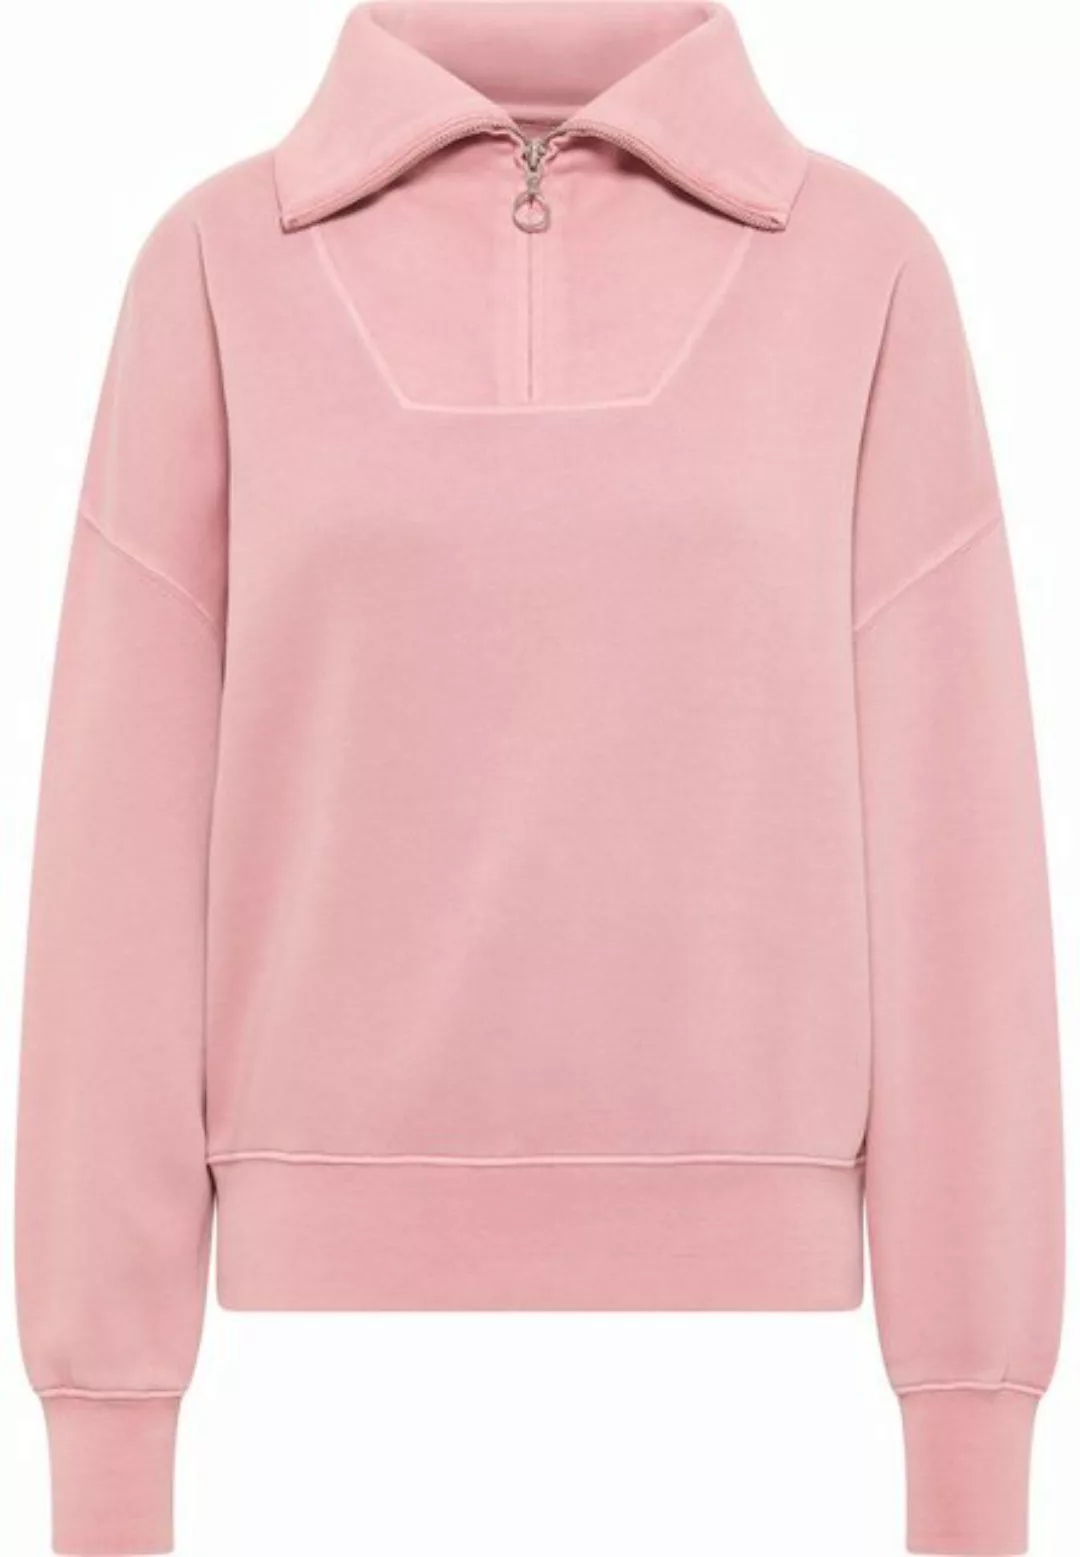 MUSTANG Sweatshirt Sweatshirt günstig online kaufen